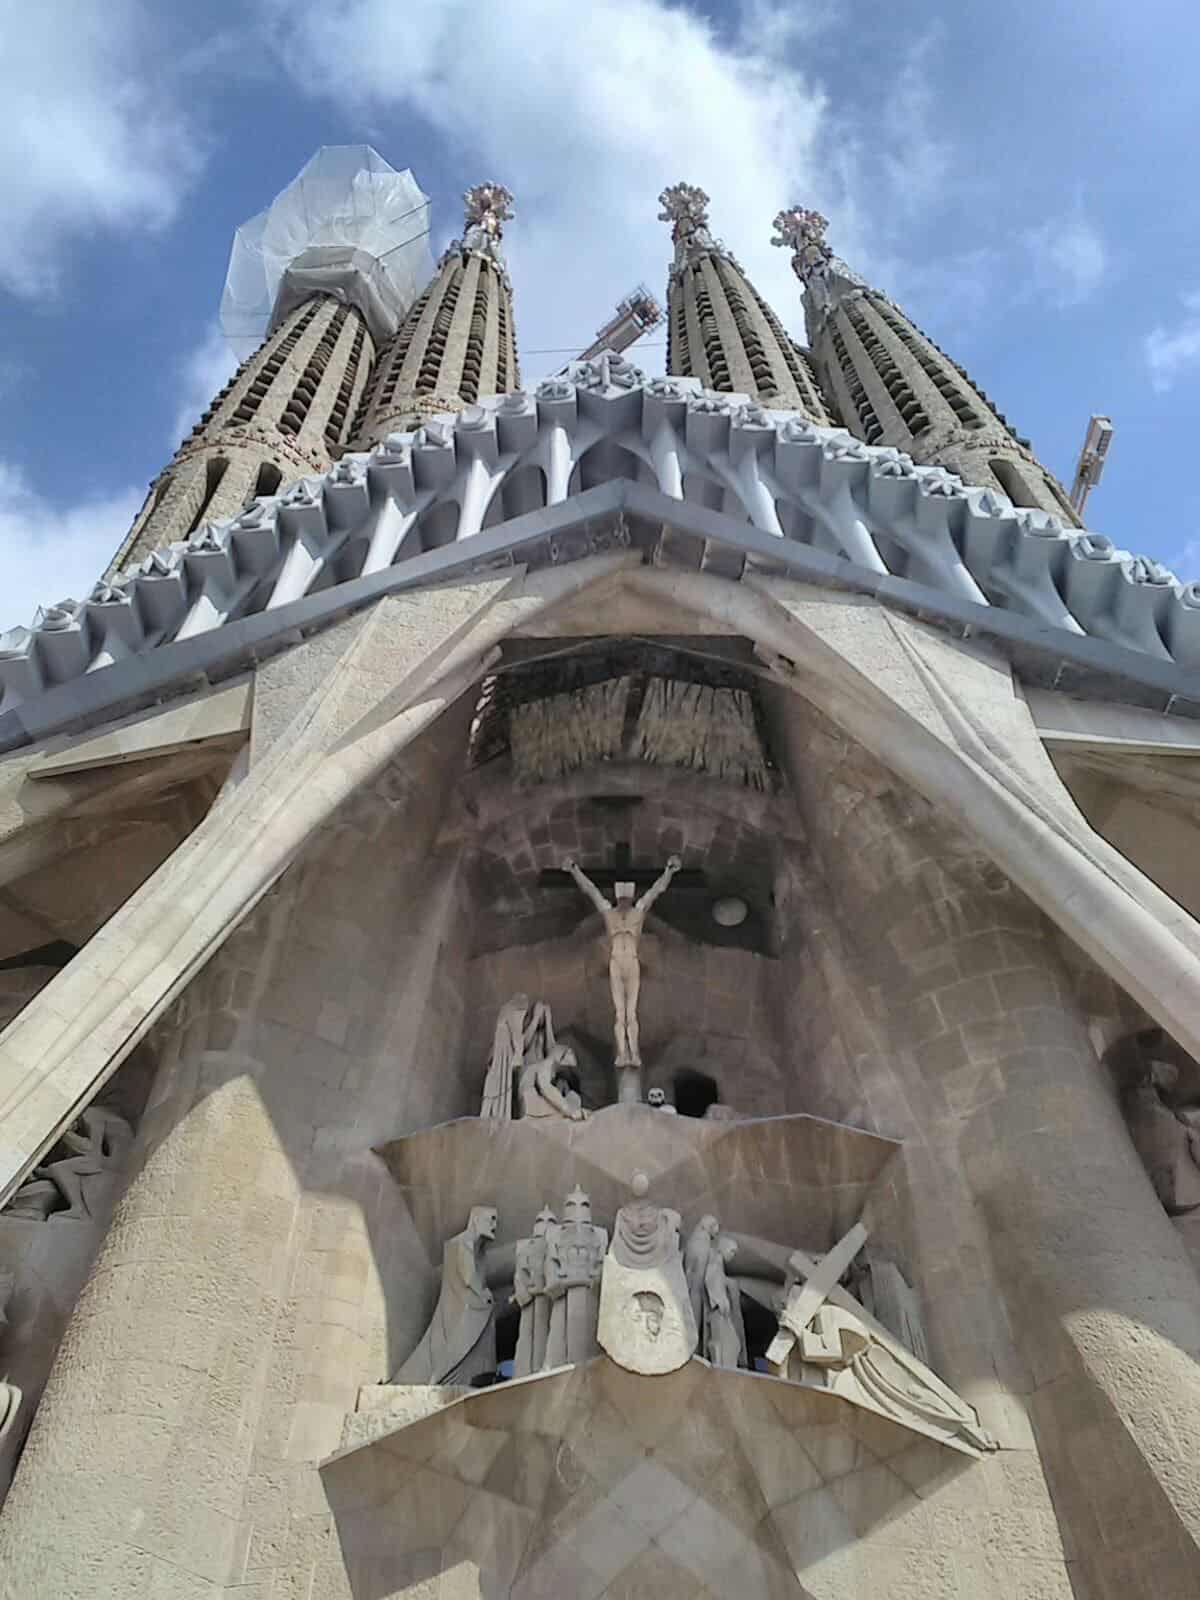 The Nativity facade of the Sagrada Familia in Barcelona, Spain